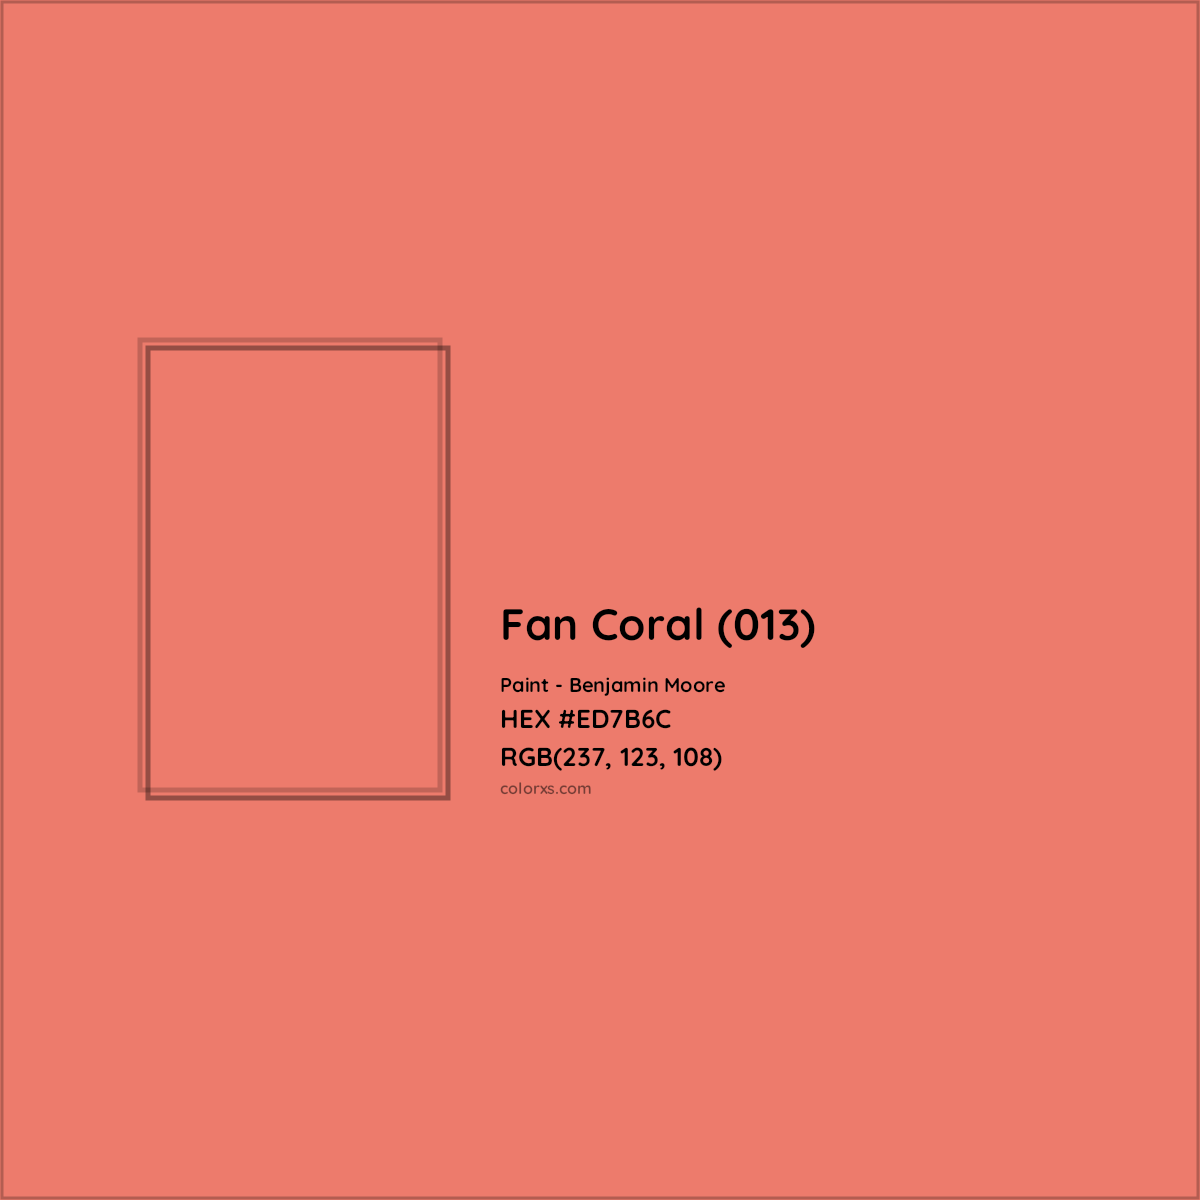 HEX #ED7B6C Fan Coral (013) Paint Benjamin Moore - Color Code